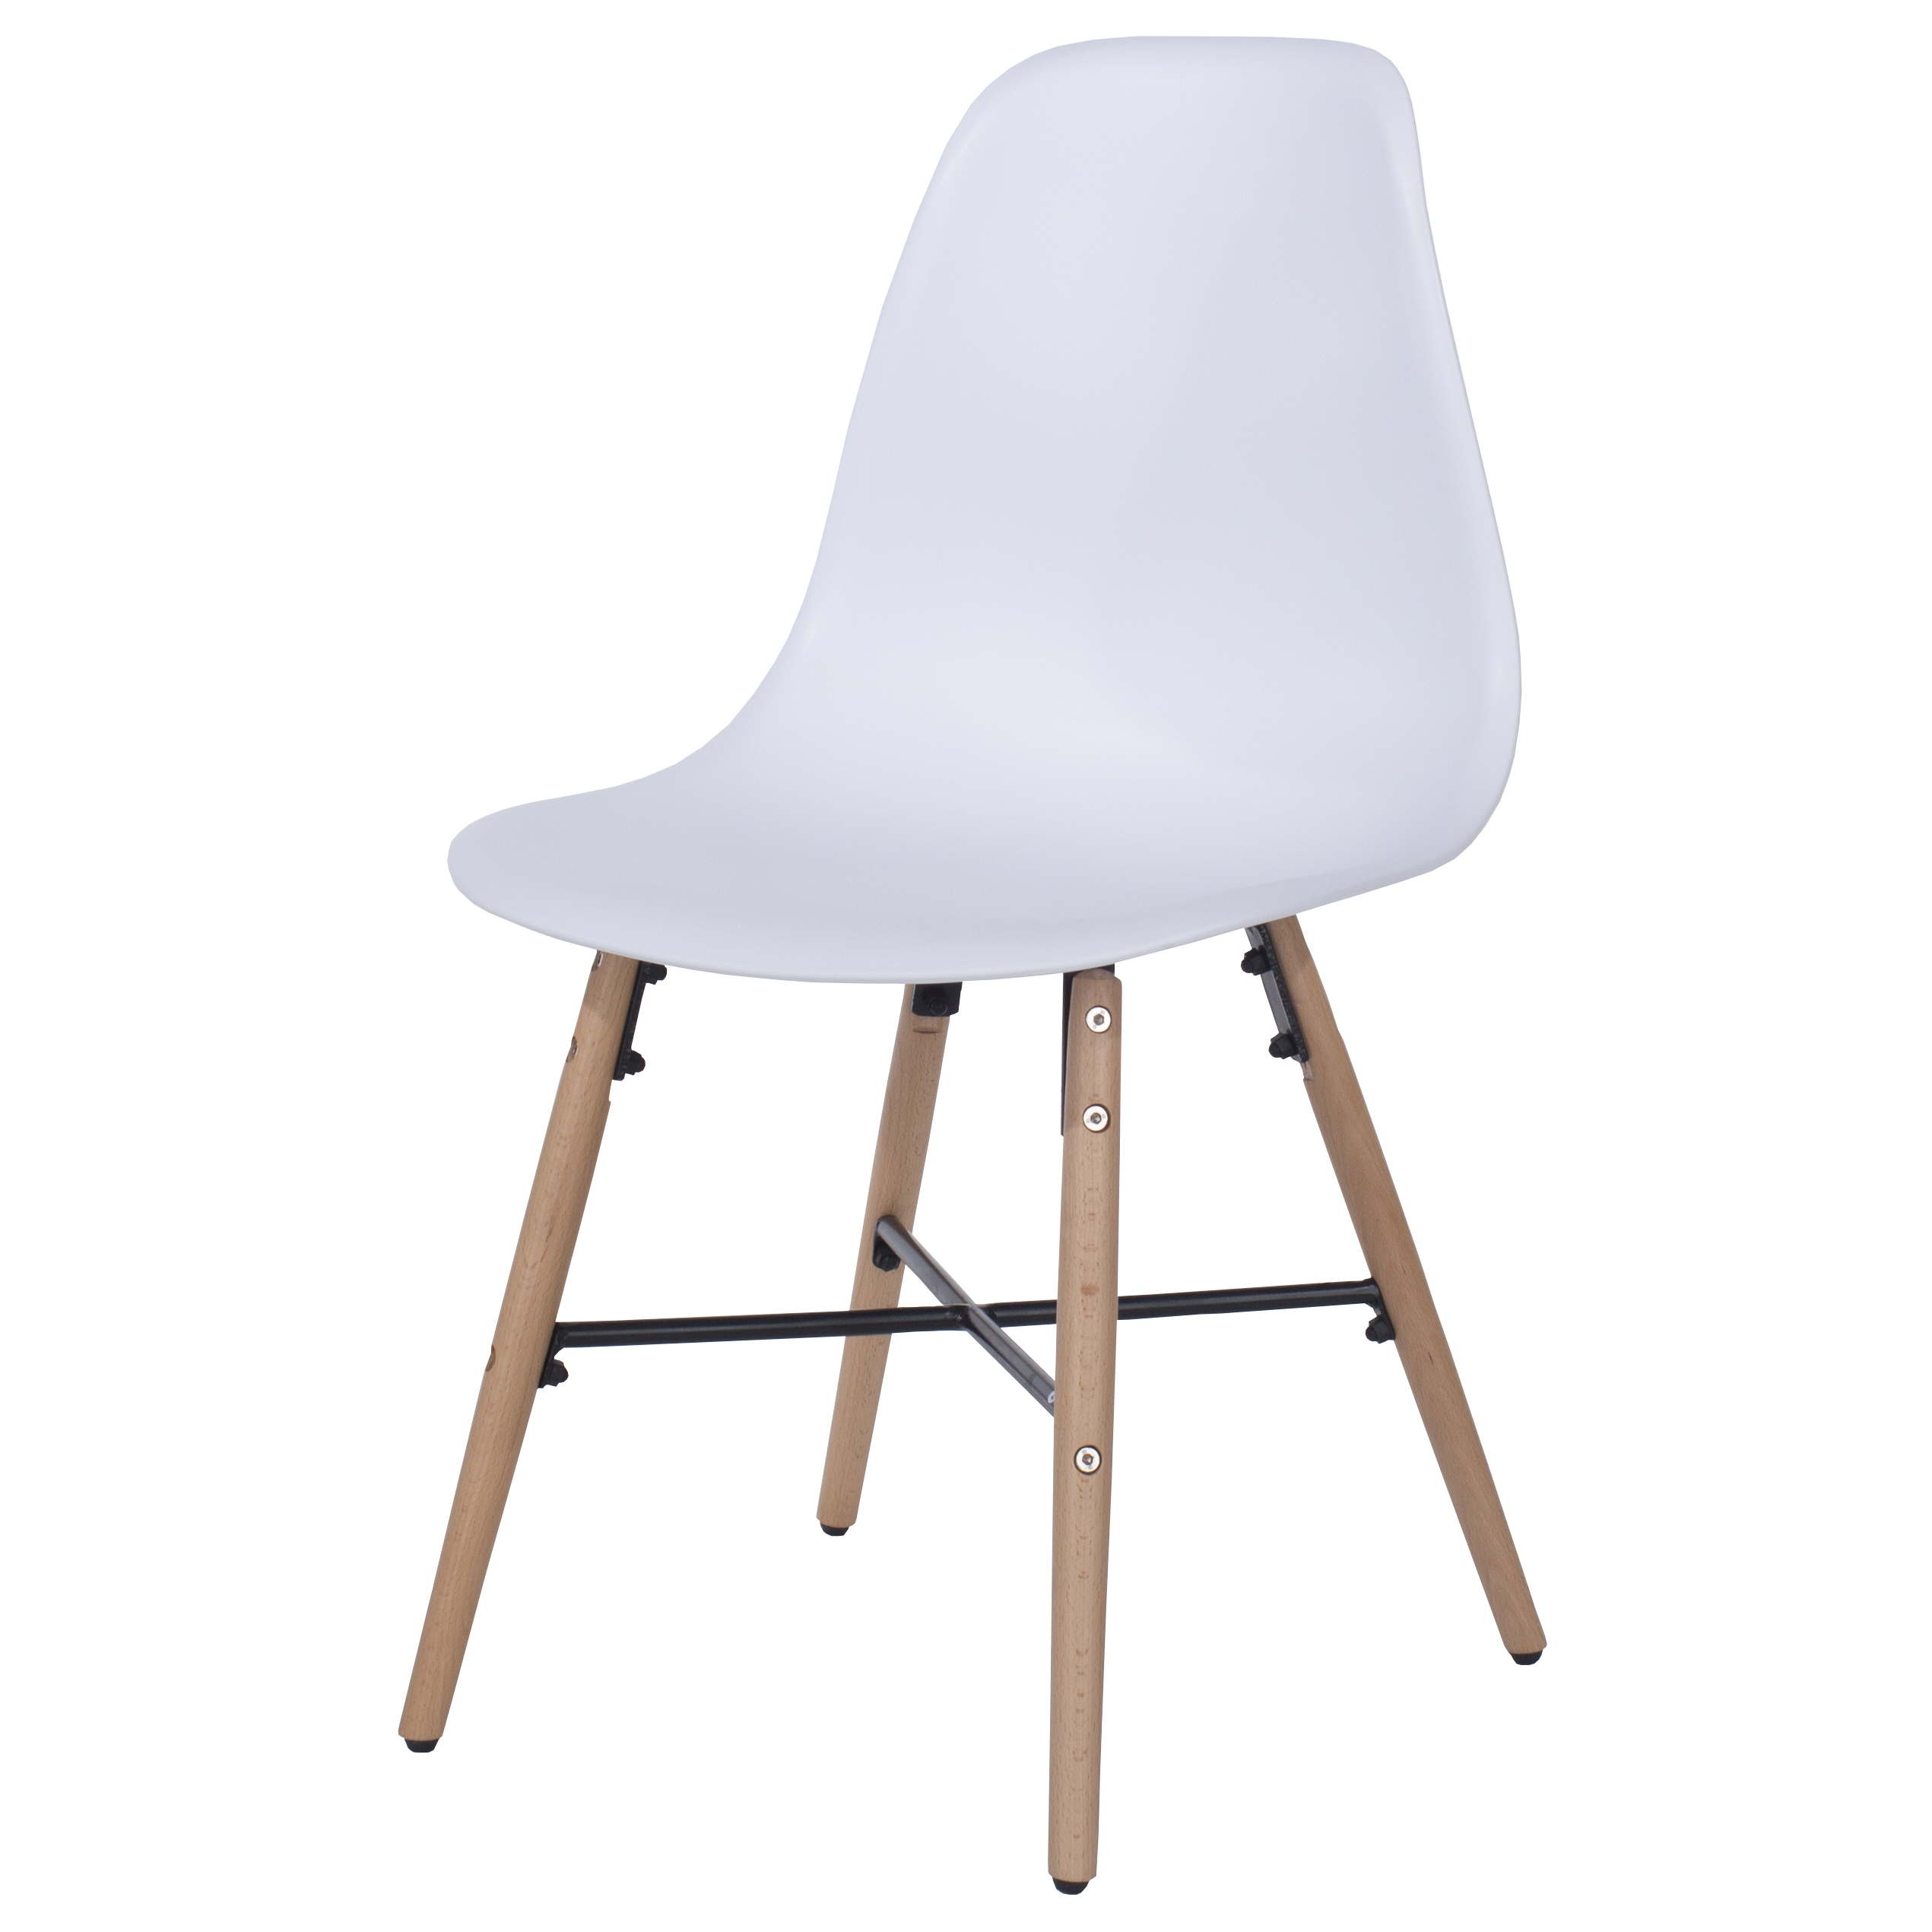 Penny White Plastic Chairs Wood Legs & Metal Cross Rails (Pair)